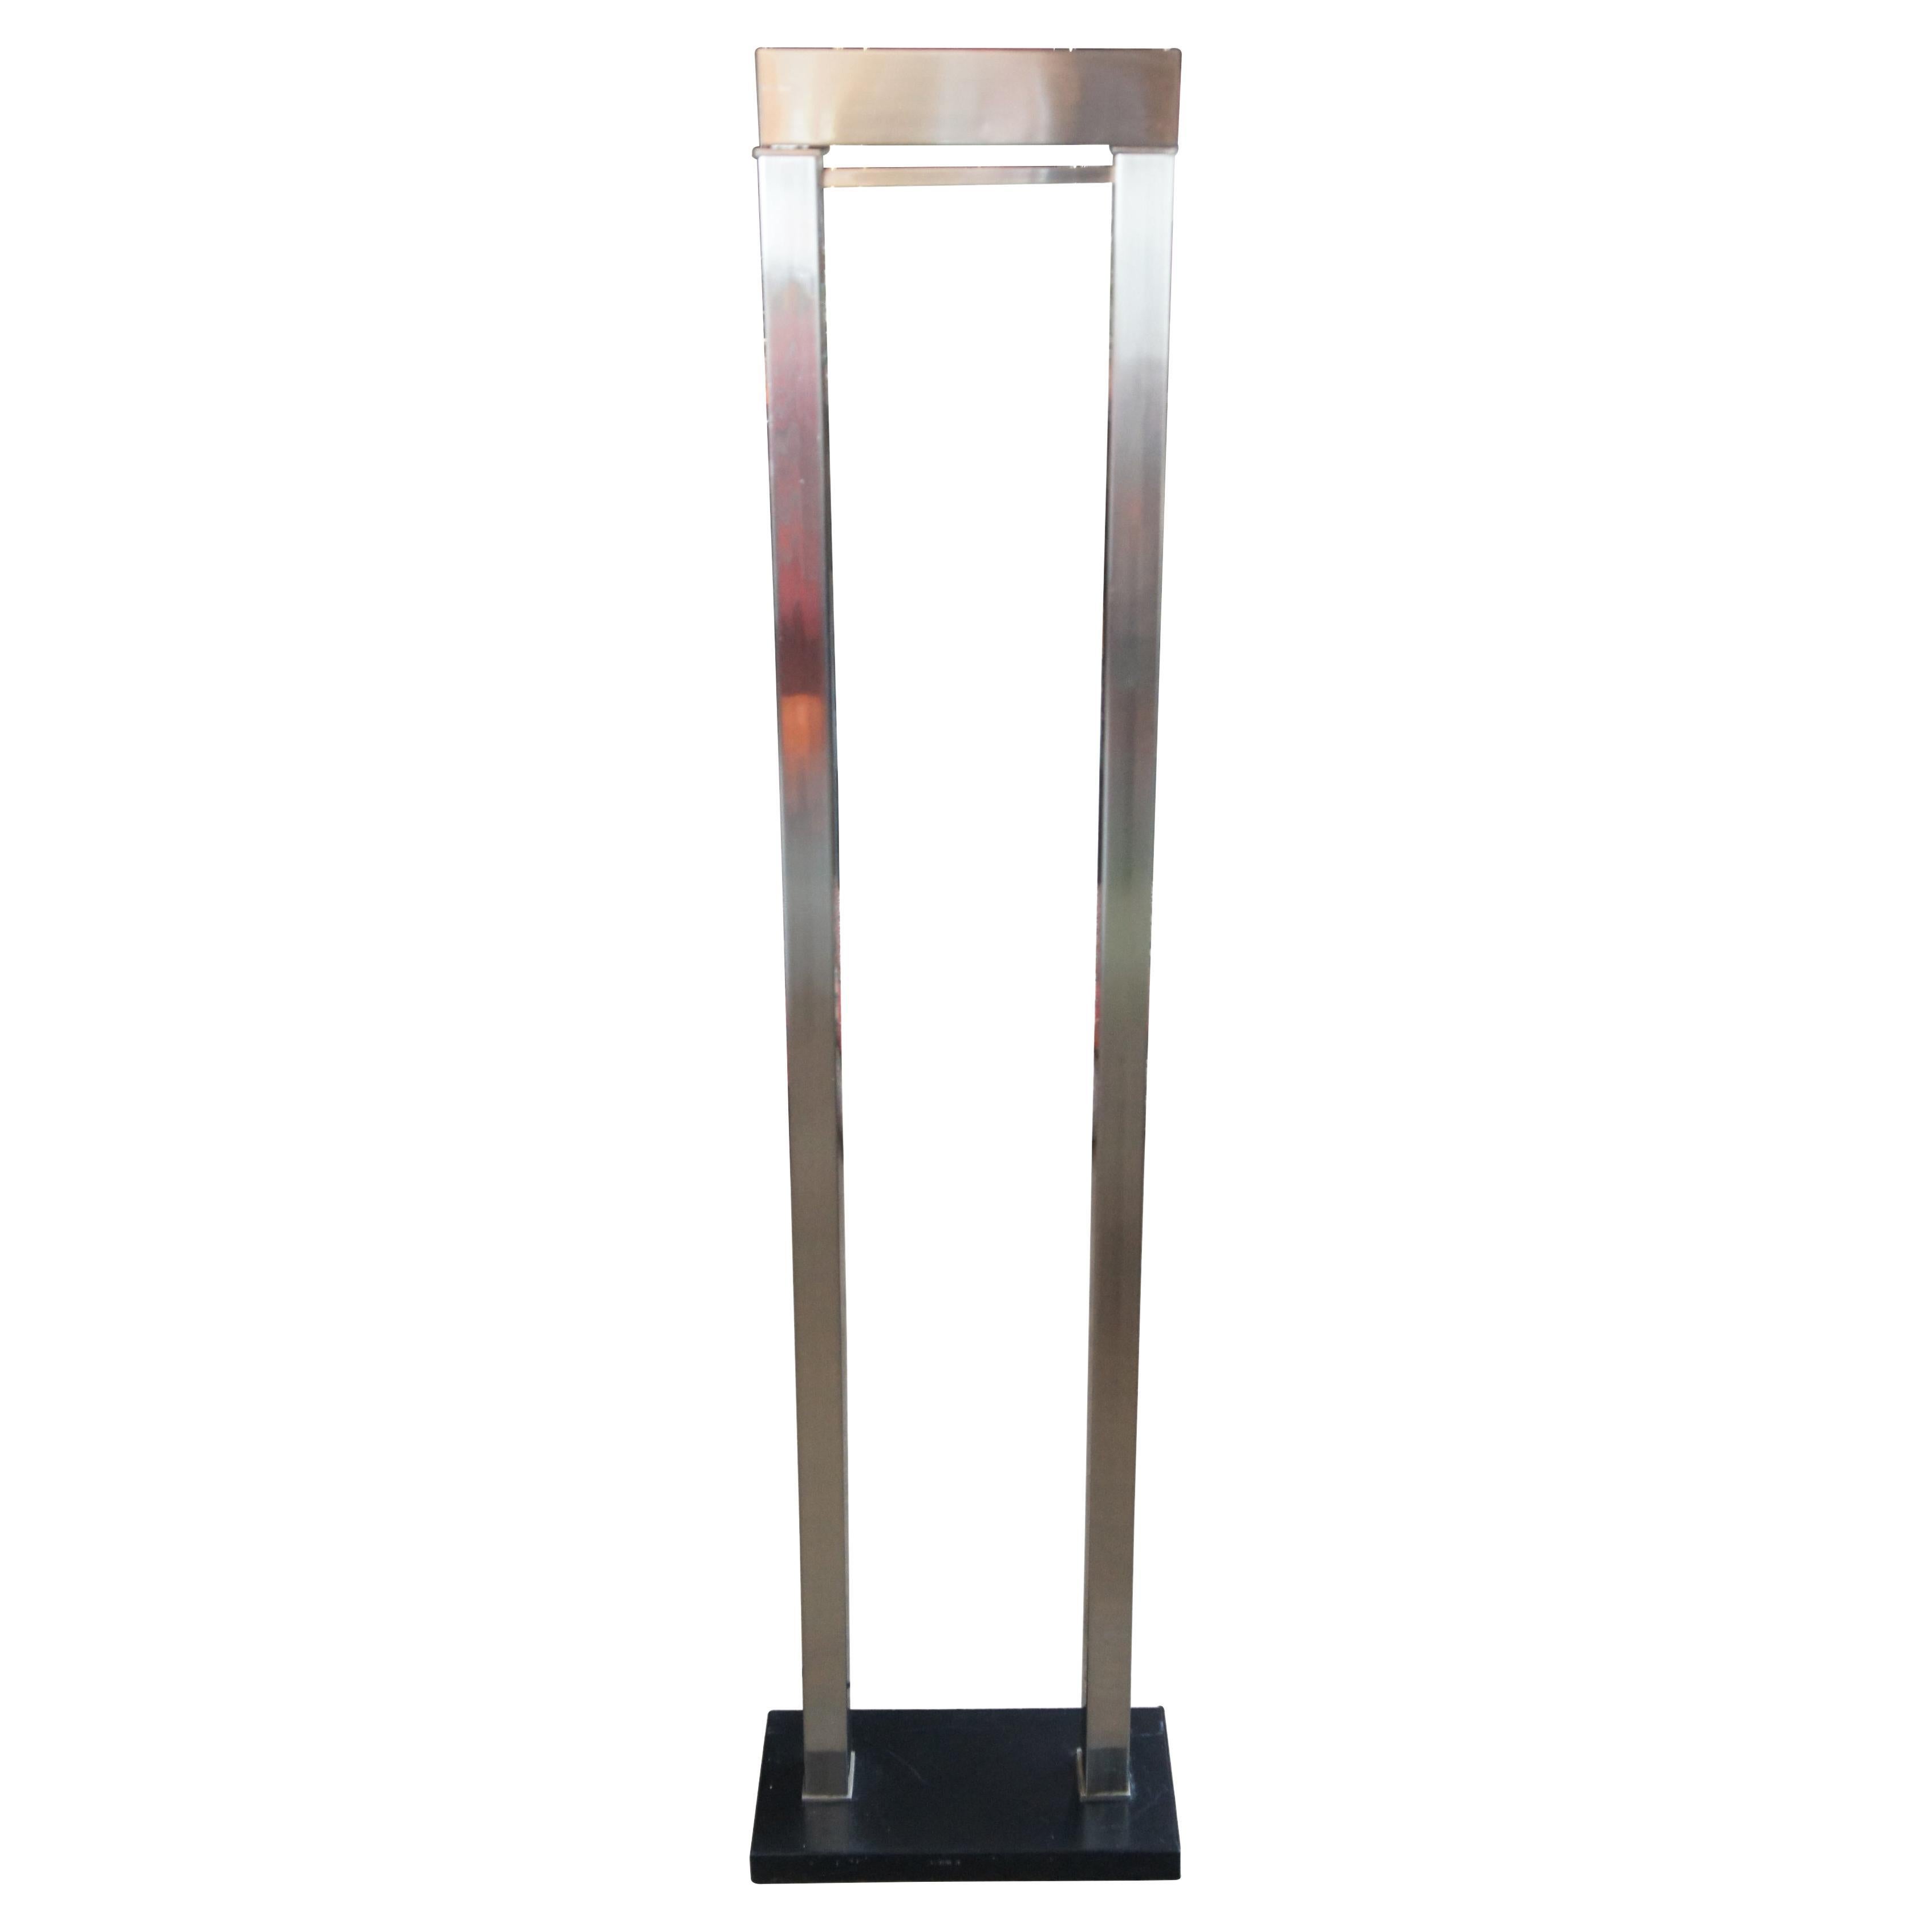 Natural Light Company Zeitgenssische drehbare Stehlampe aus Metall, dimmbar im Angebot